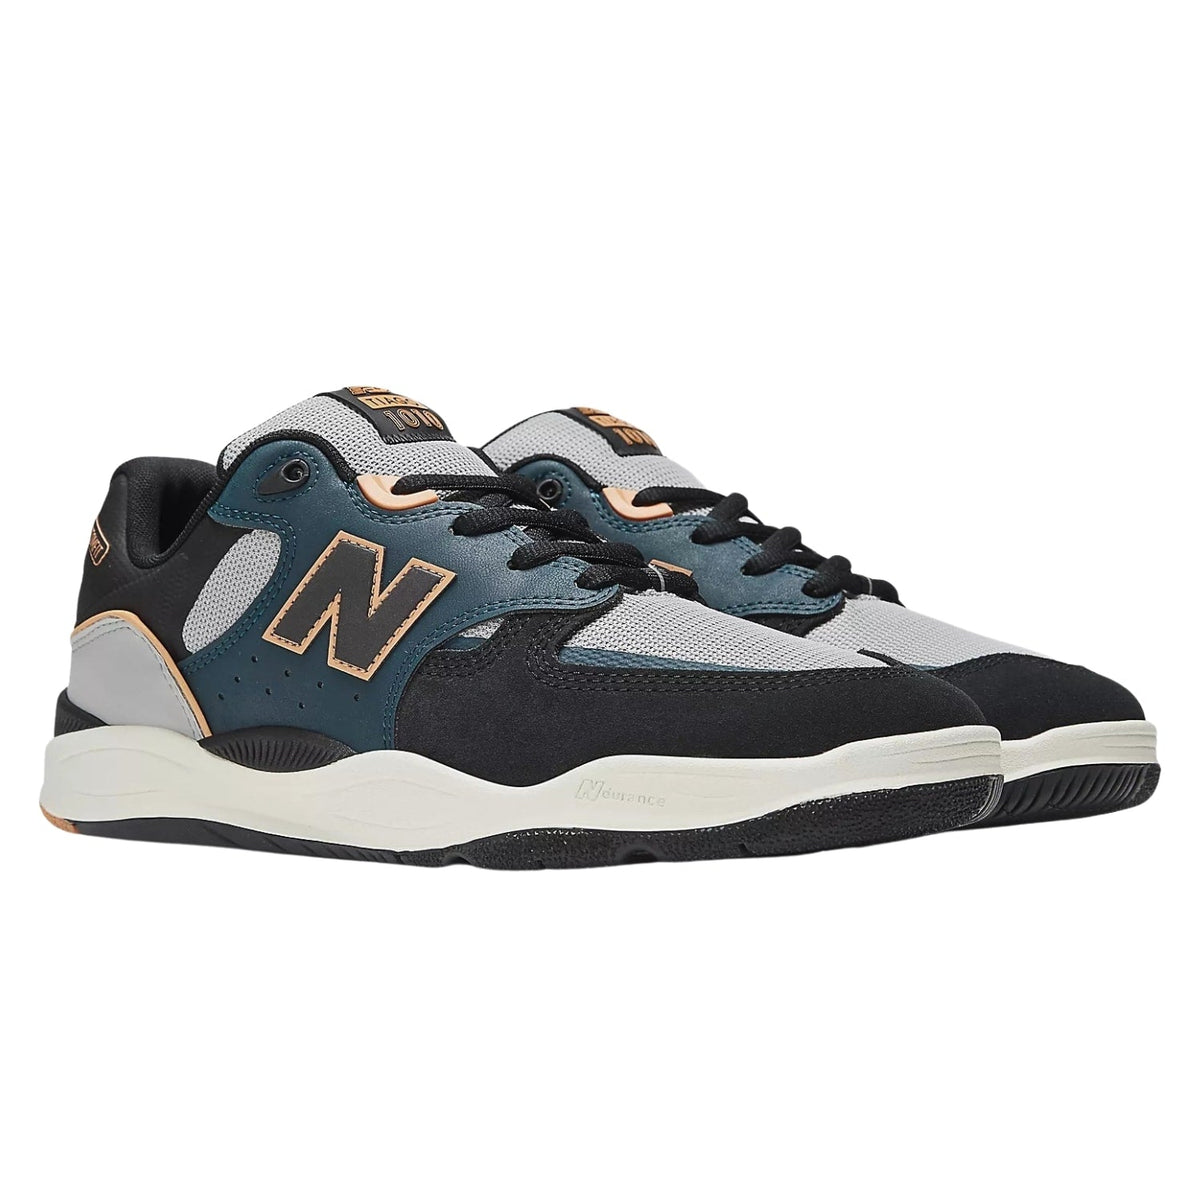 New Balance Numeric NM1010 Tiago Lemos Skate Shoes - Teal/Black